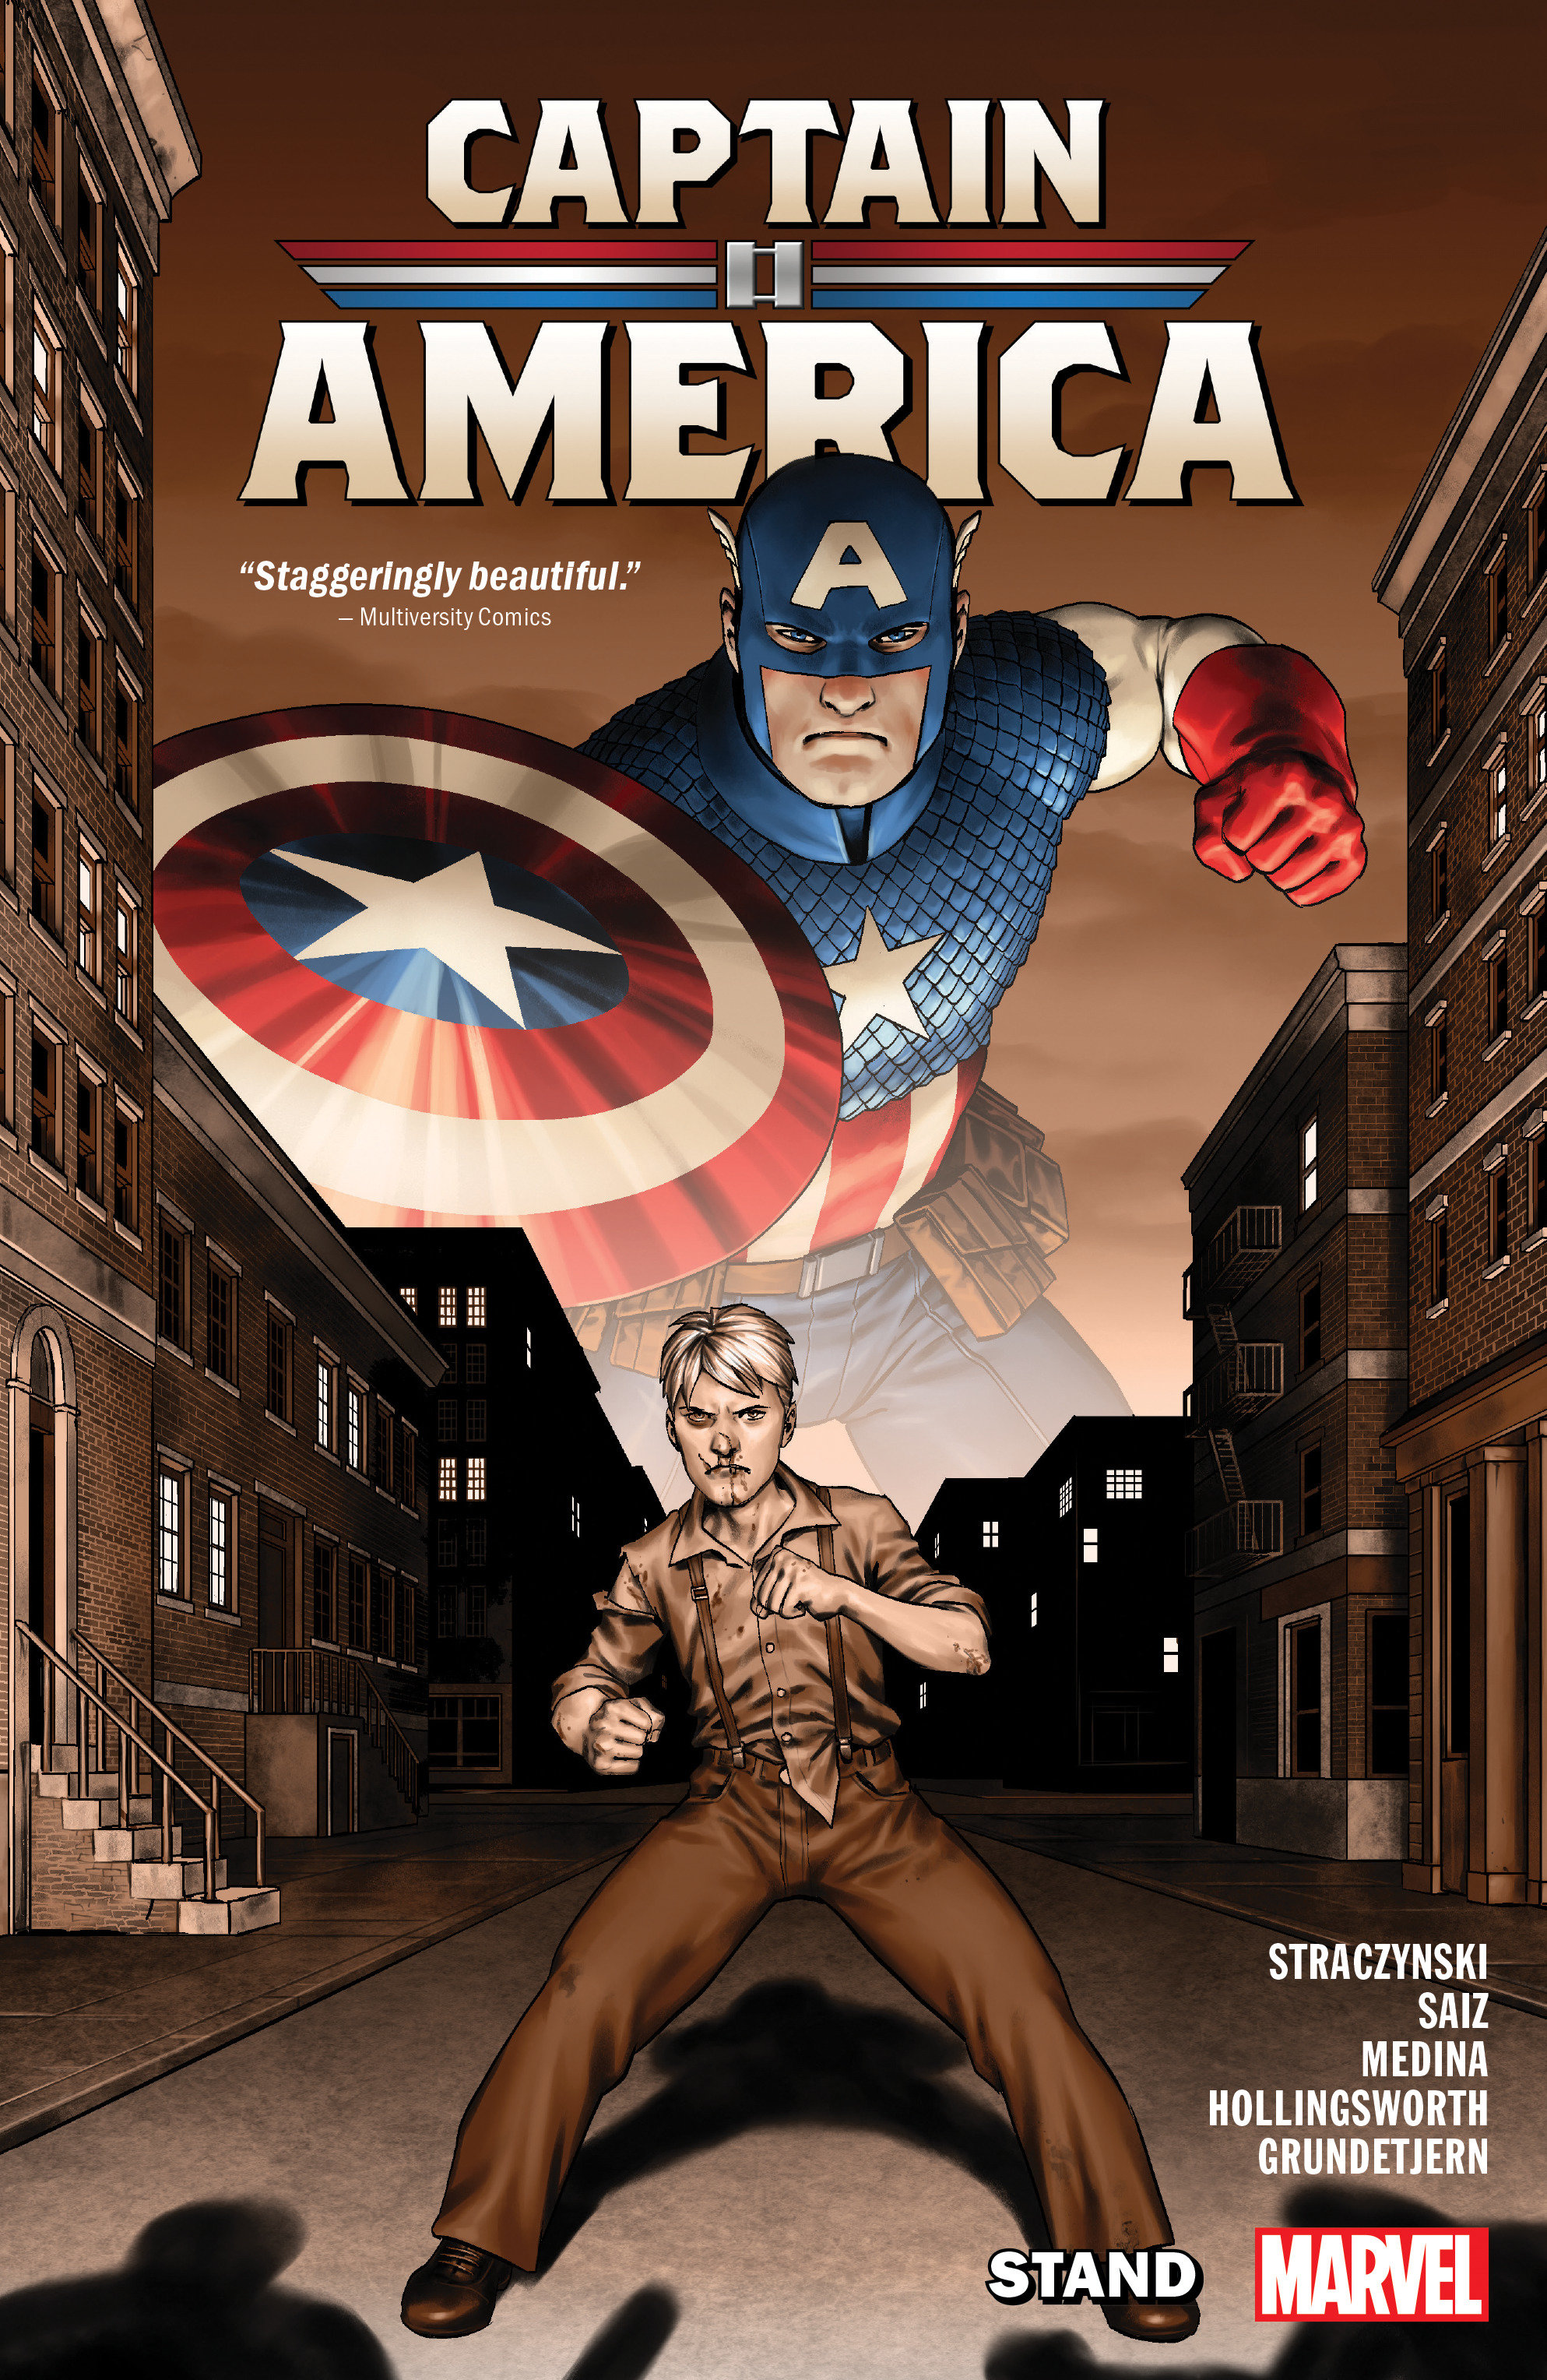 Captain America by J. Michael Straczynski Graphic Novel Volume 1 Stand